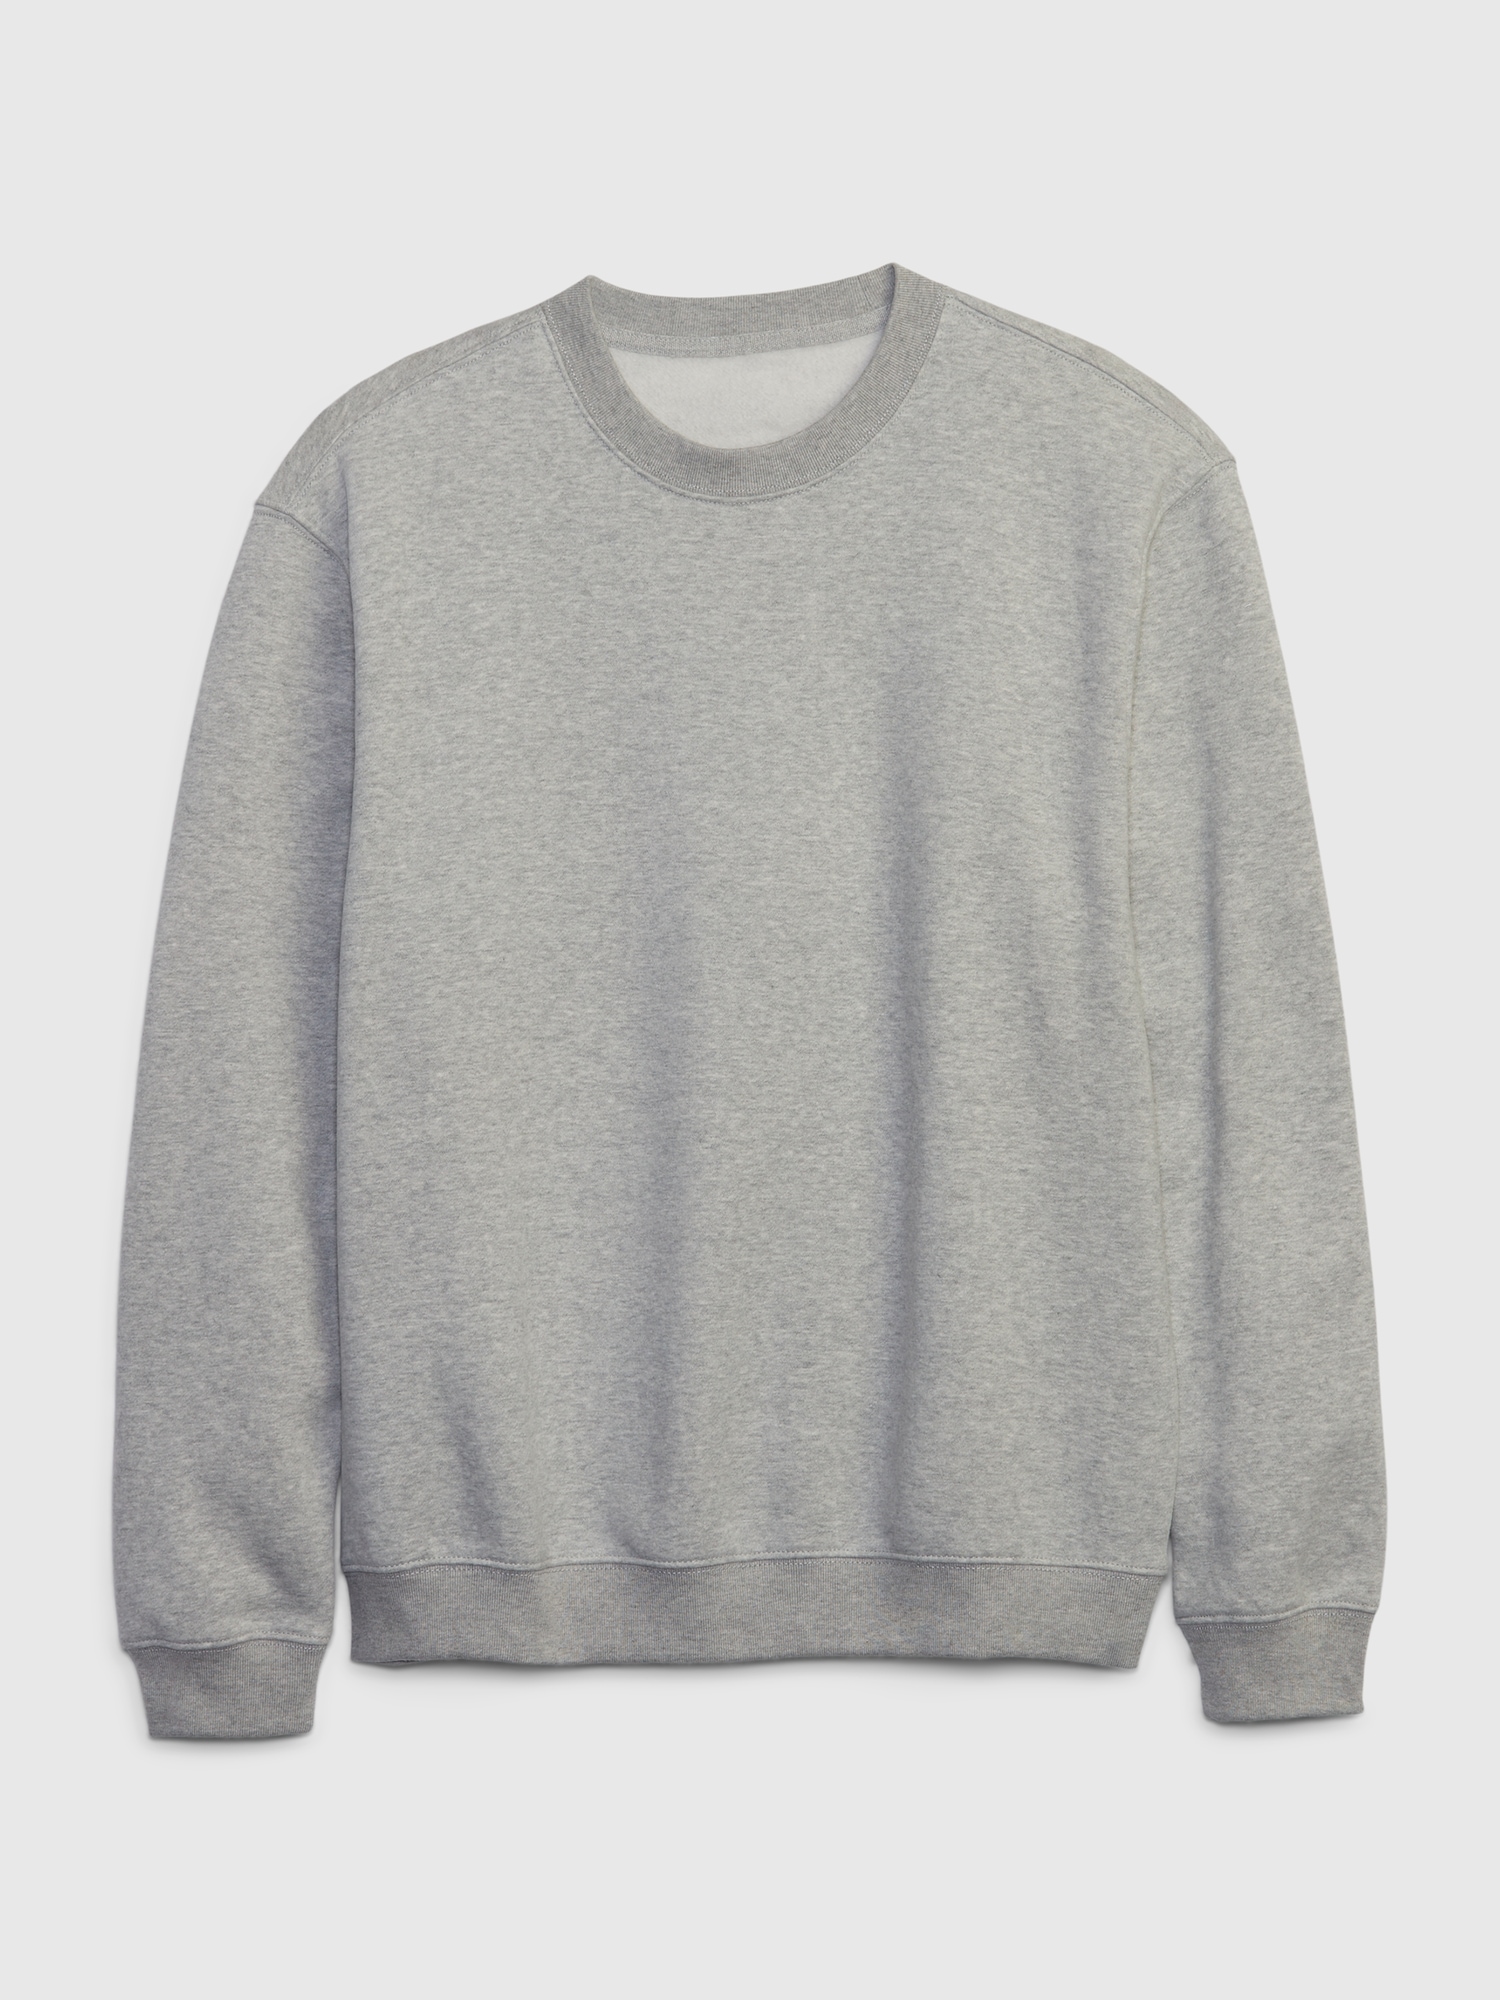 Men's Vintage Soft Crewneck Sweatshirt by Gap Gray Size XXL